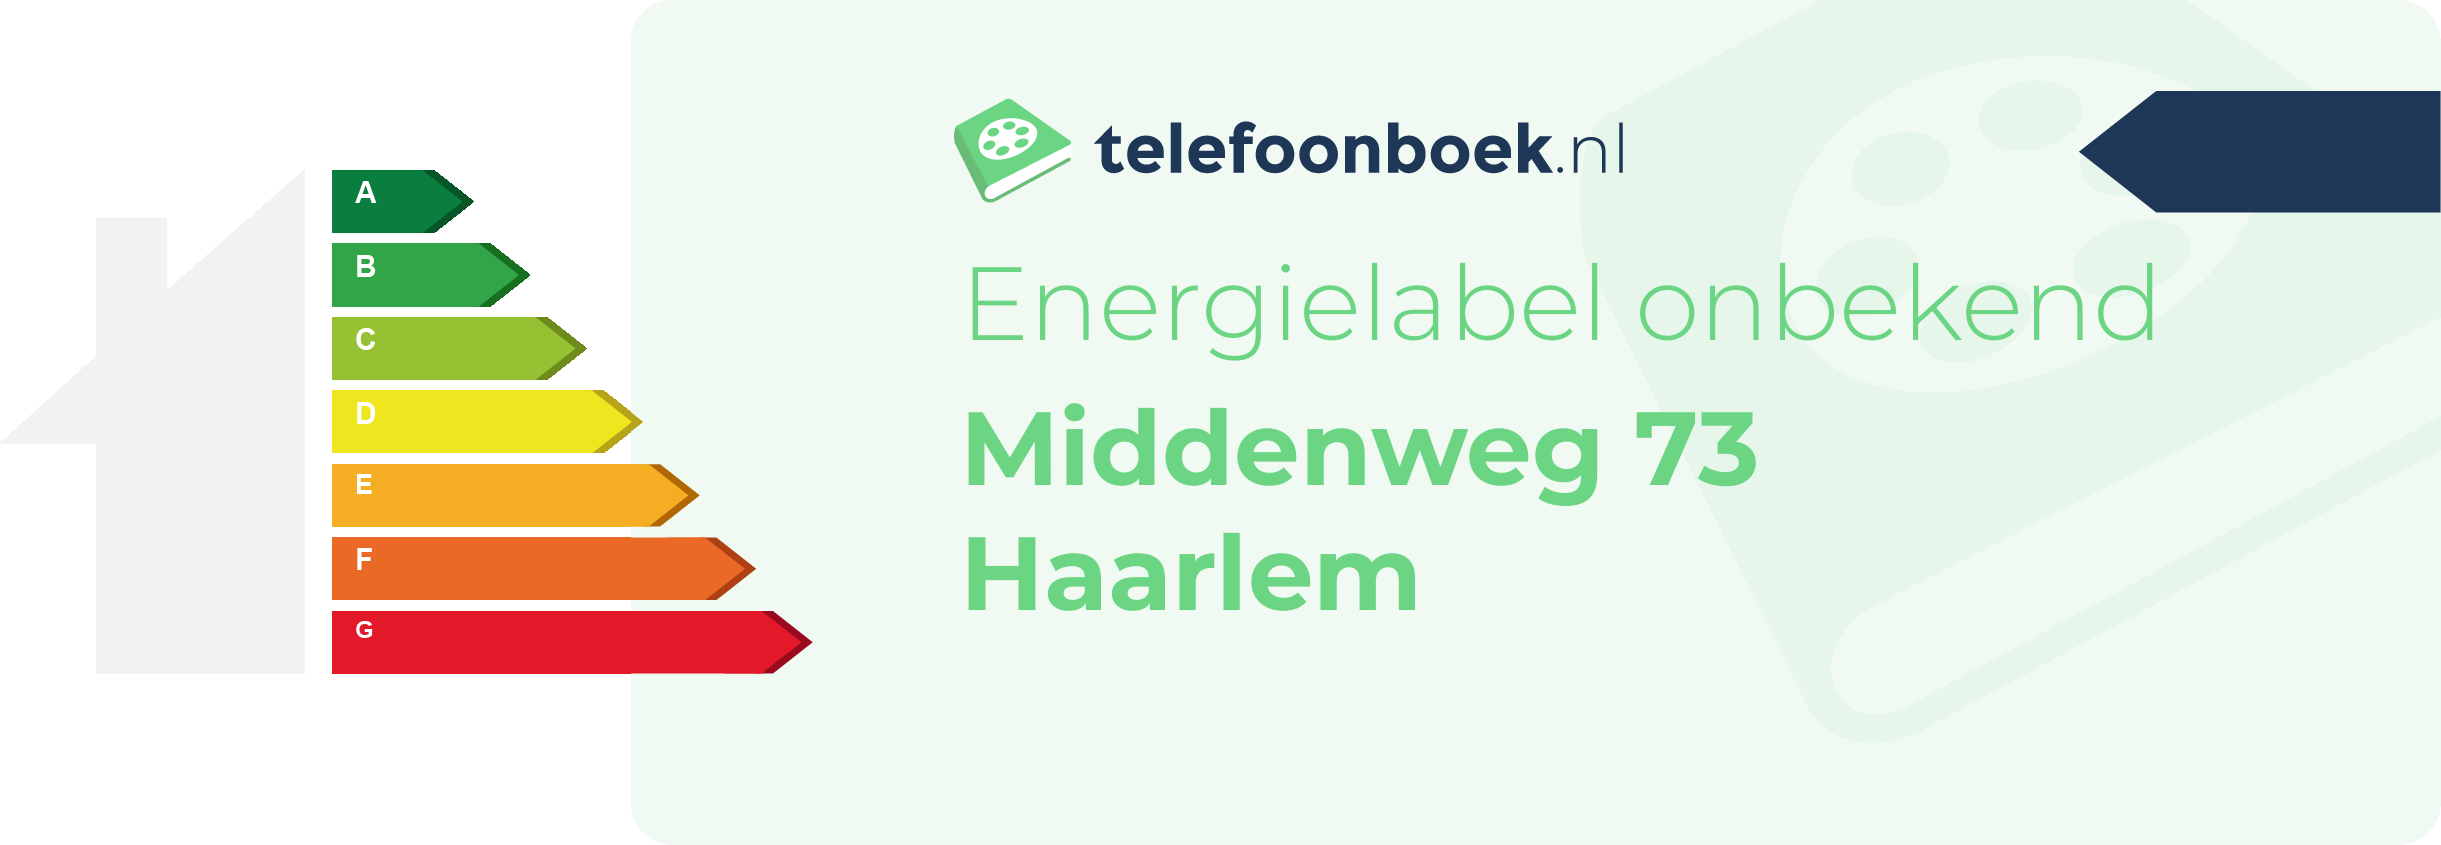 Energielabel Middenweg 73 Haarlem